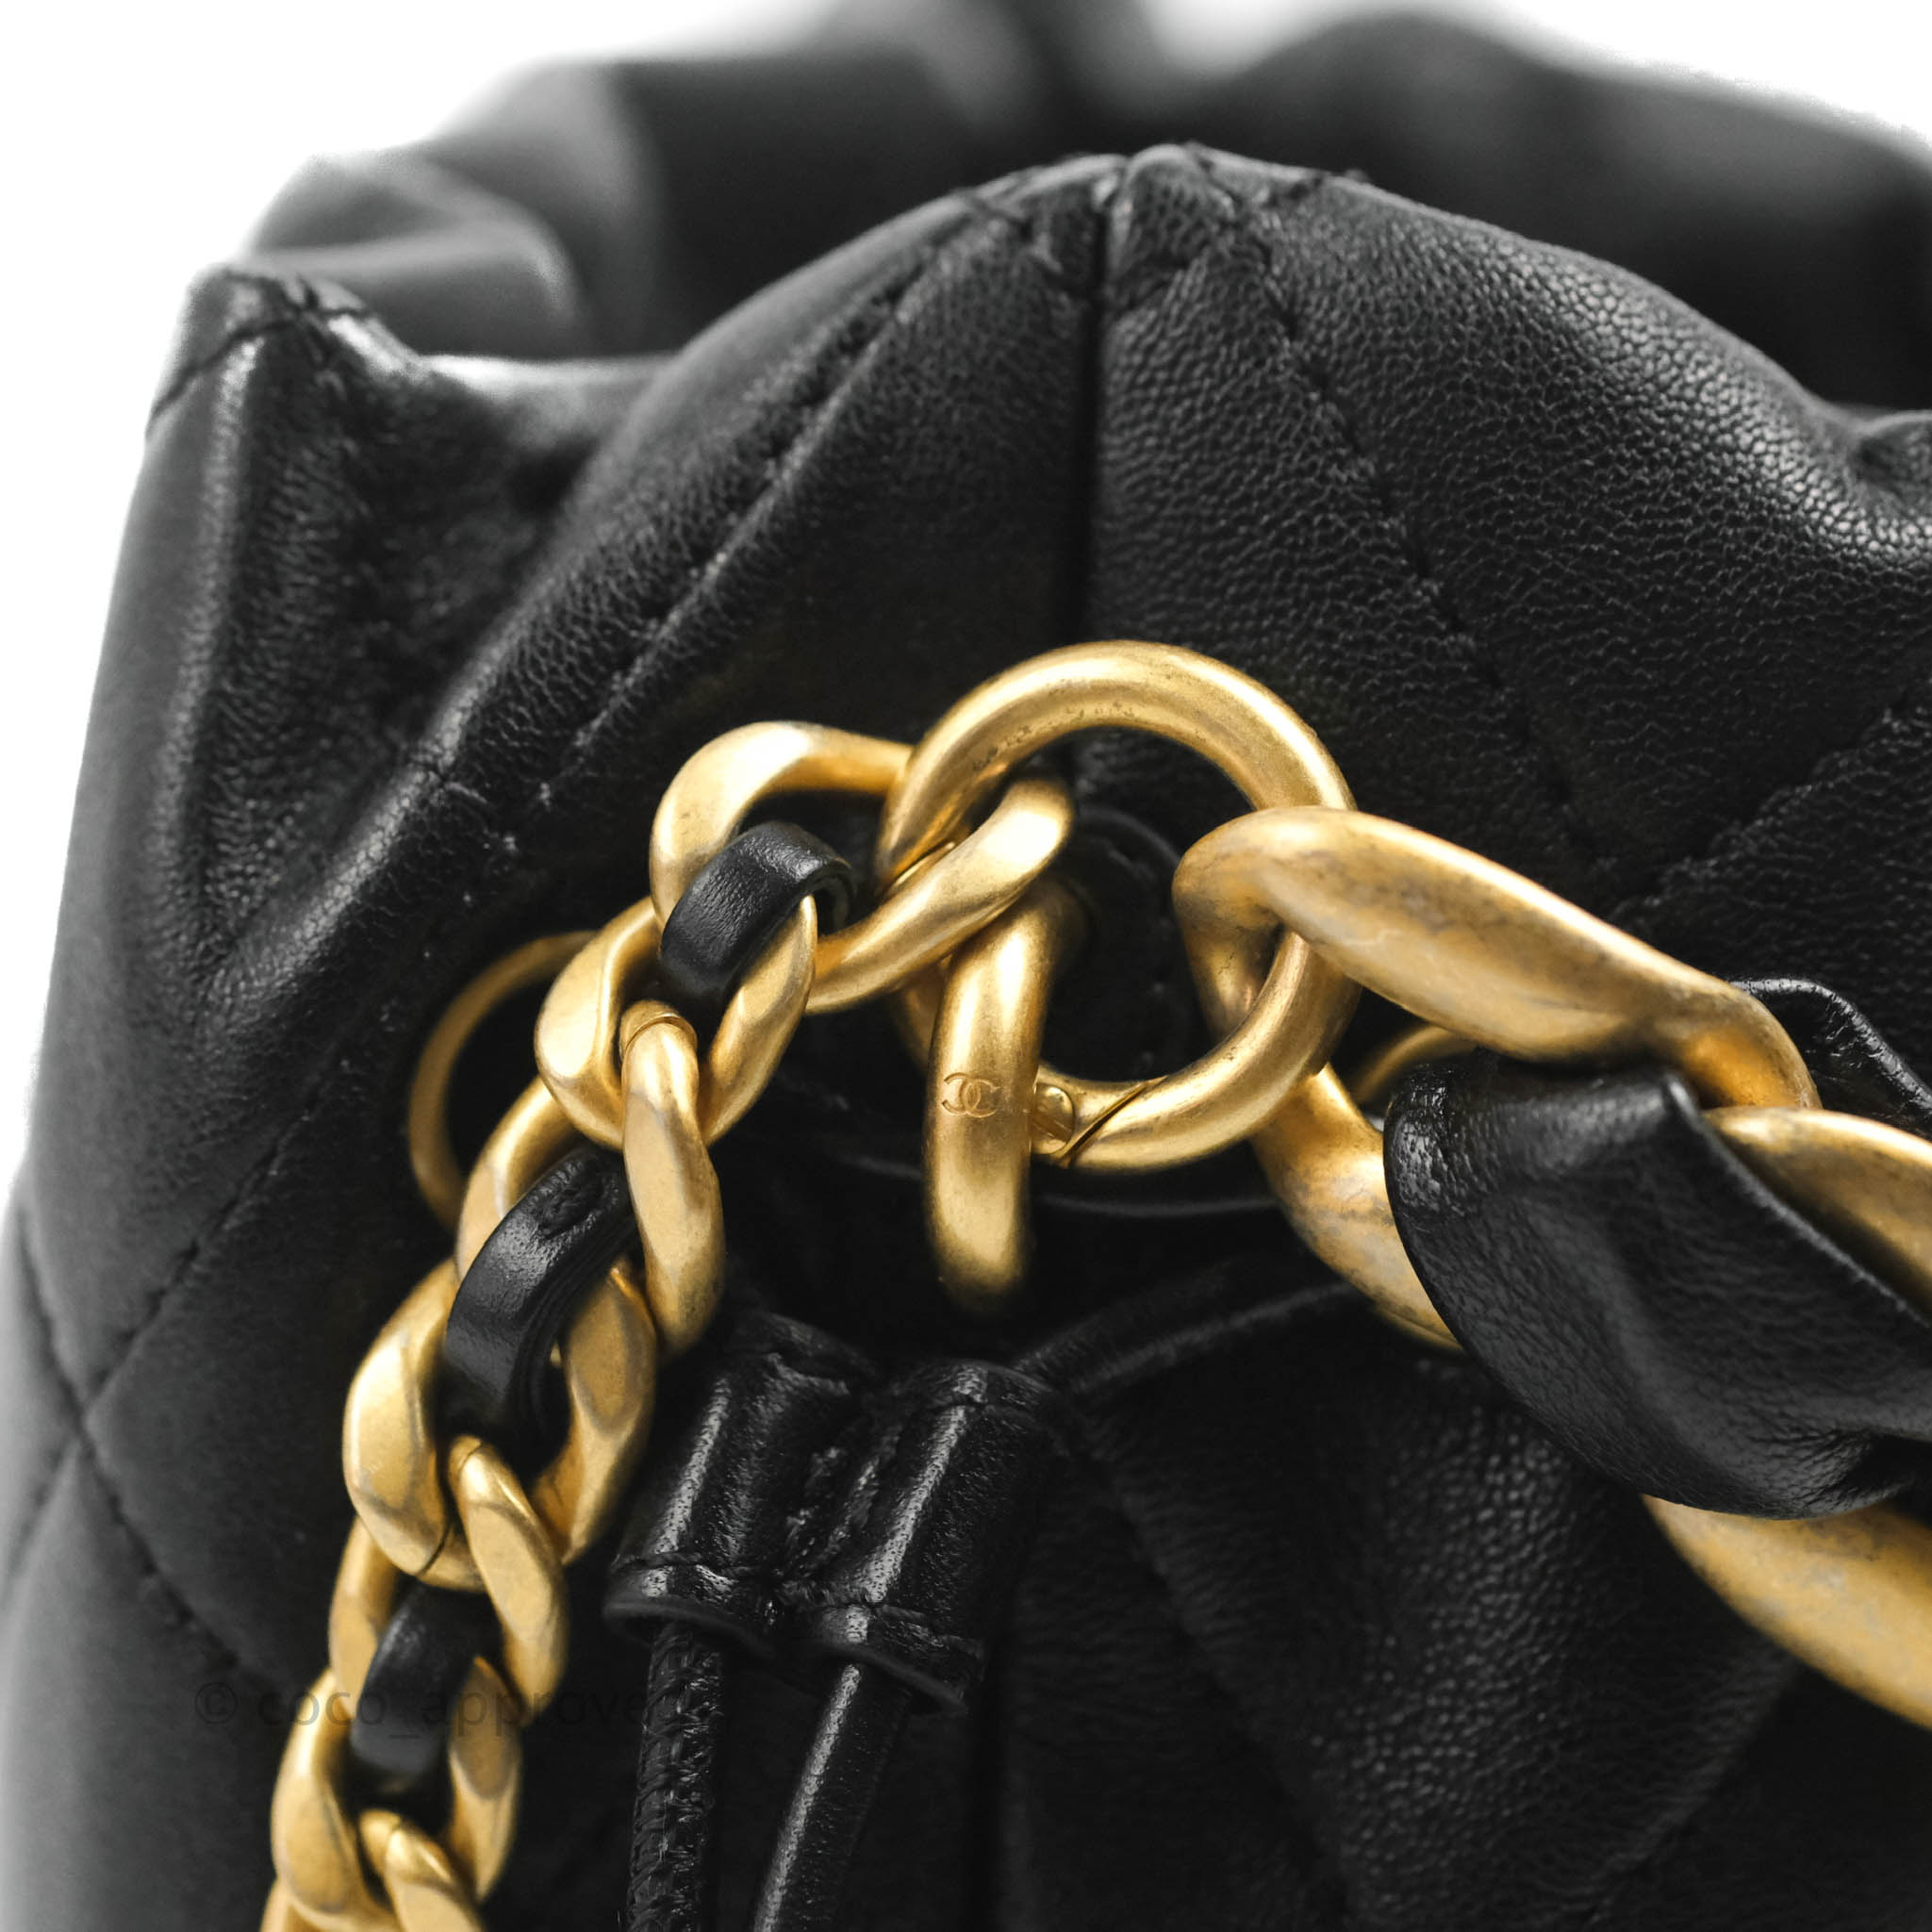 Chanel Yellow 2019 Calfskin Bucket Bag · INTO